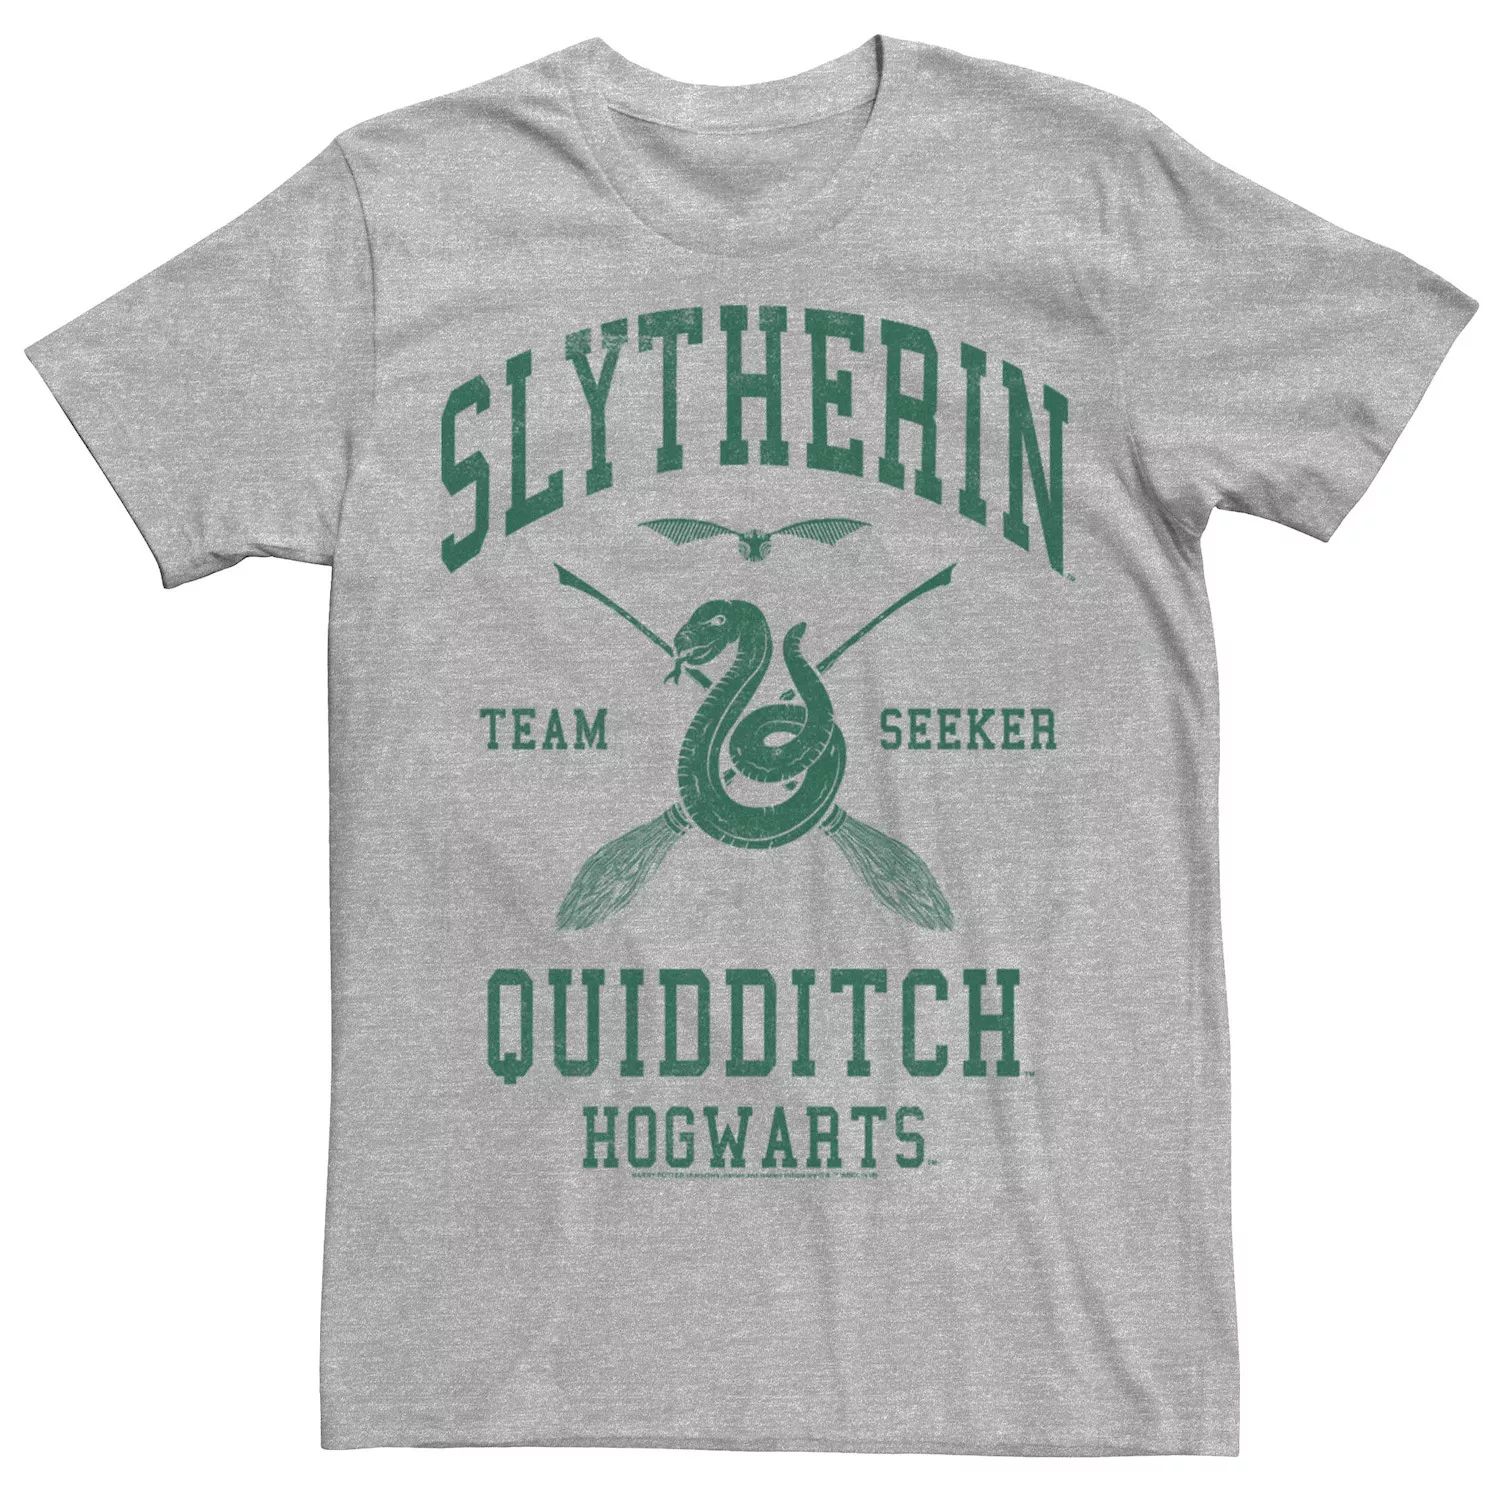 Мужская футболка Slytherin Team Seeker с надписью Harry Potter printio slytherin quidditch team